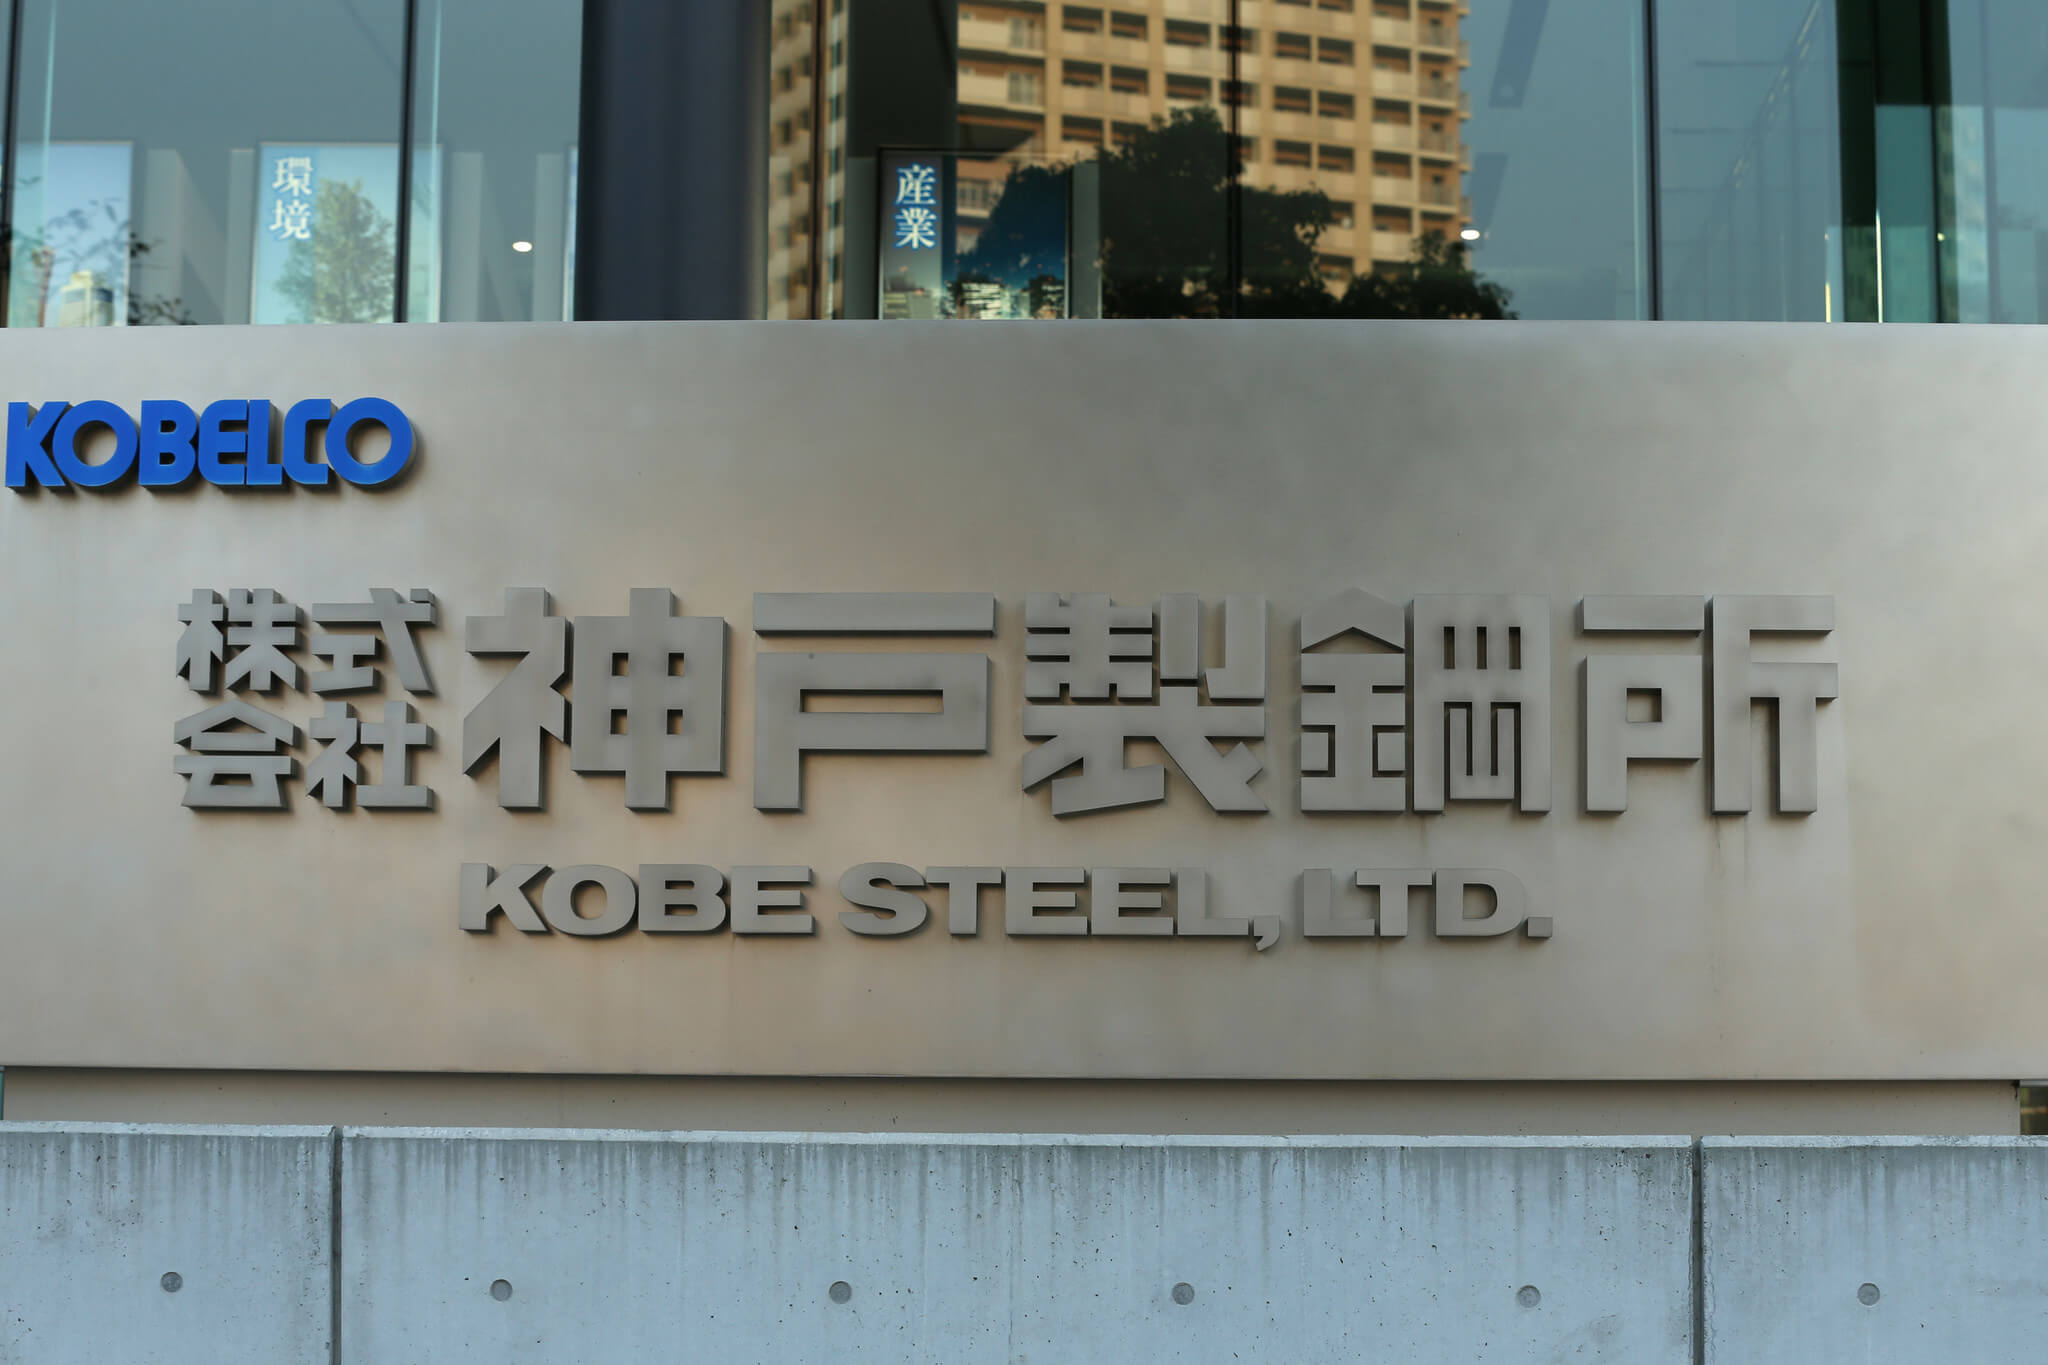 Kobe Steel